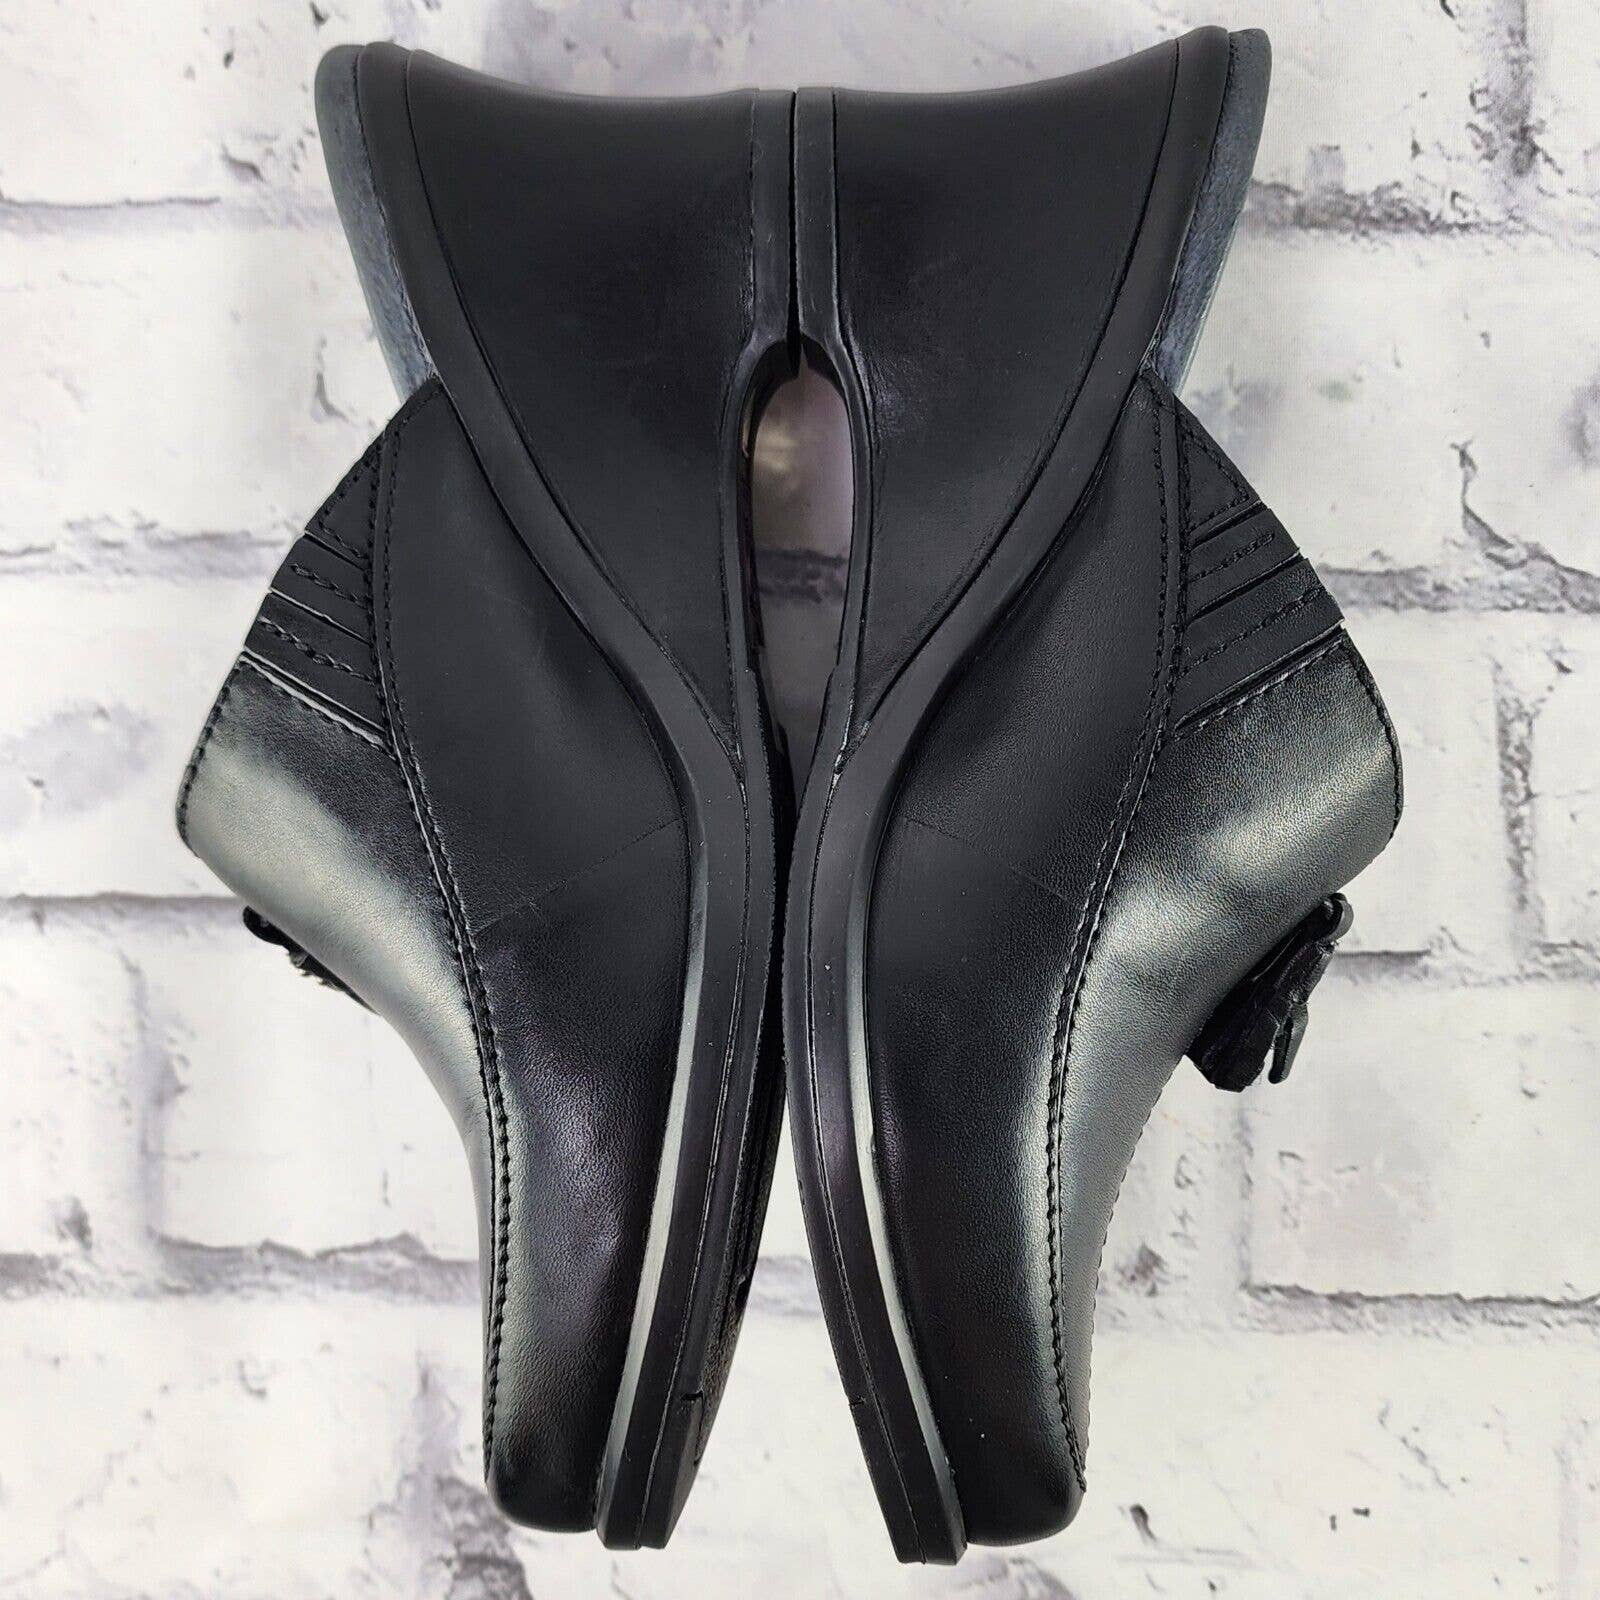 Ariat Tassel Wedge Mules Women's Size 6.5 B Black Leather Casual Slip On Heels